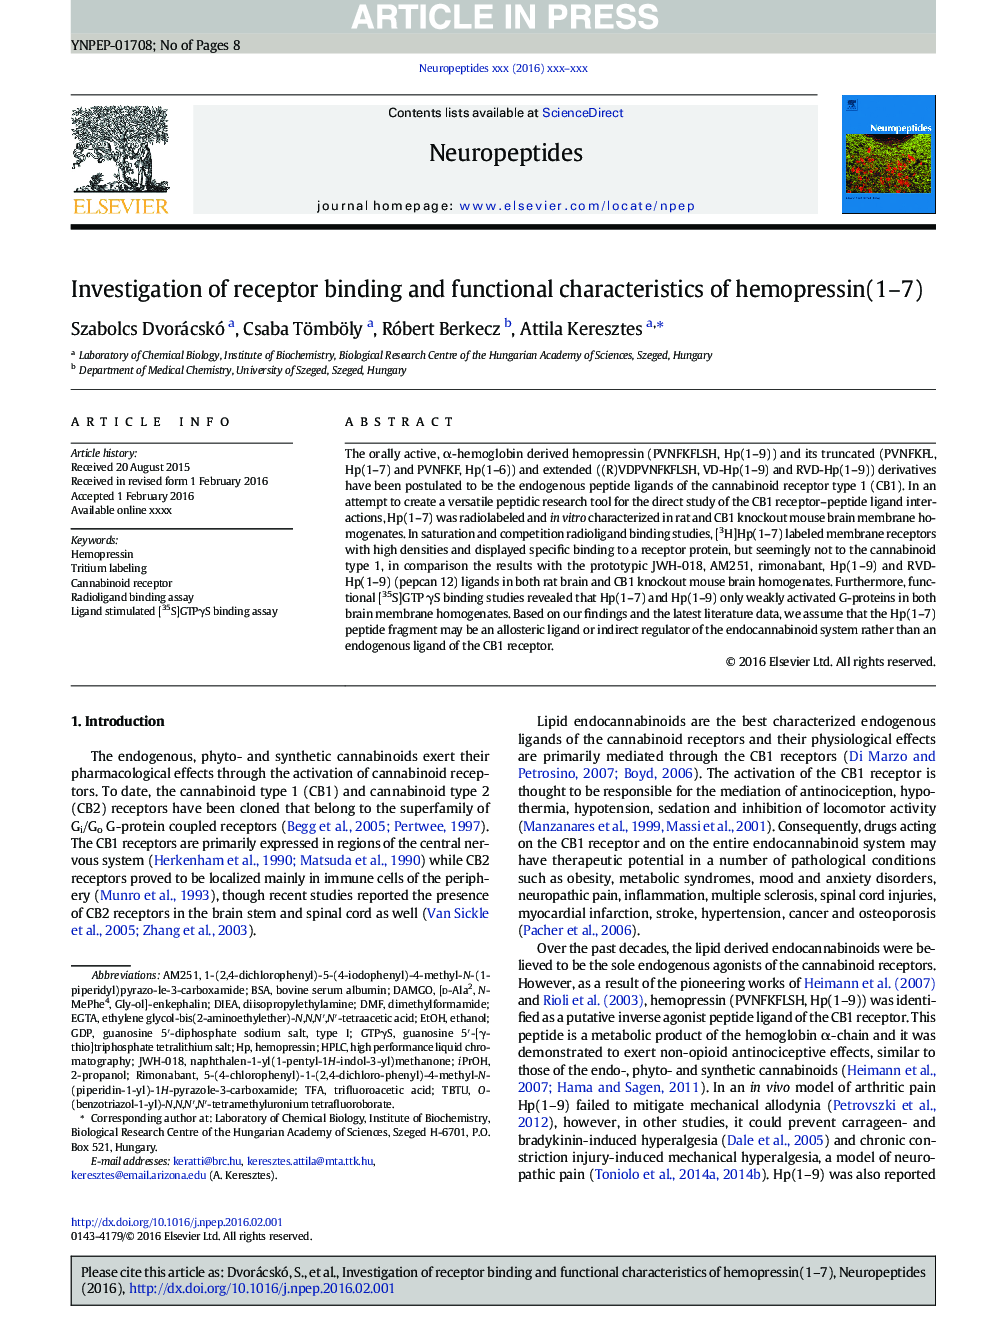 Investigation of receptor binding and functional characteristics of hemopressin(1-7)